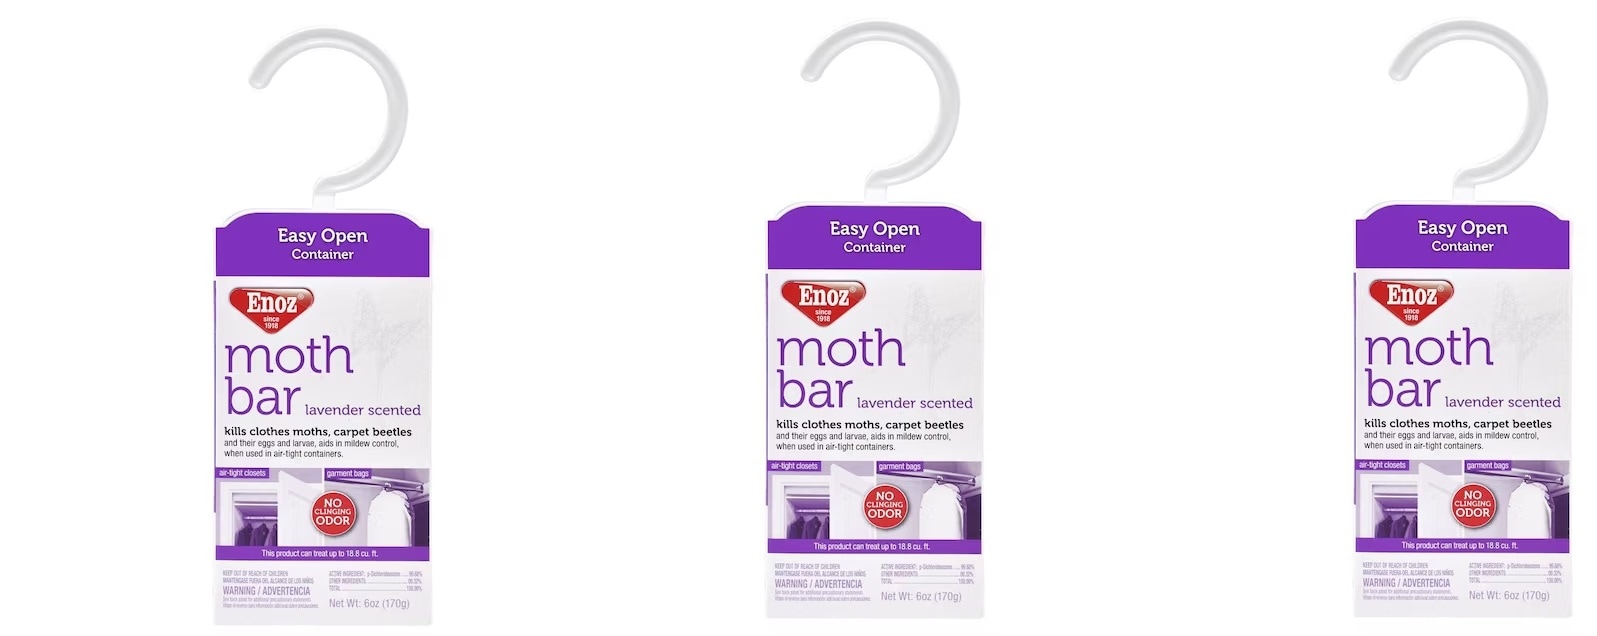 Enoz Lavender Moth Bar 3-Count Moth Balls Home & Perimeter Indoor Device in White | 496.3